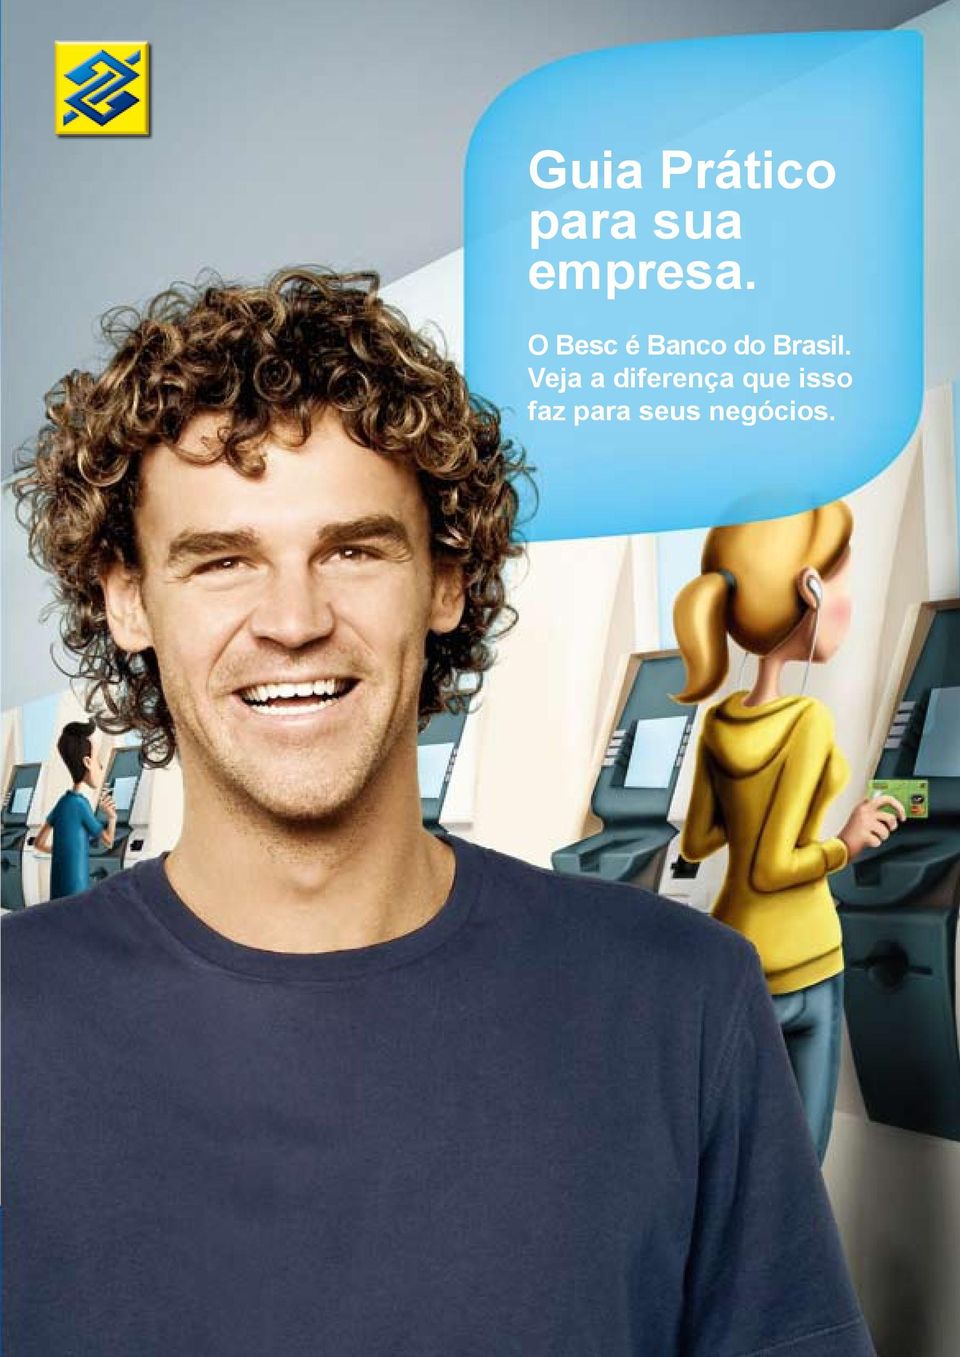 O Besc é Banco do Brasil.